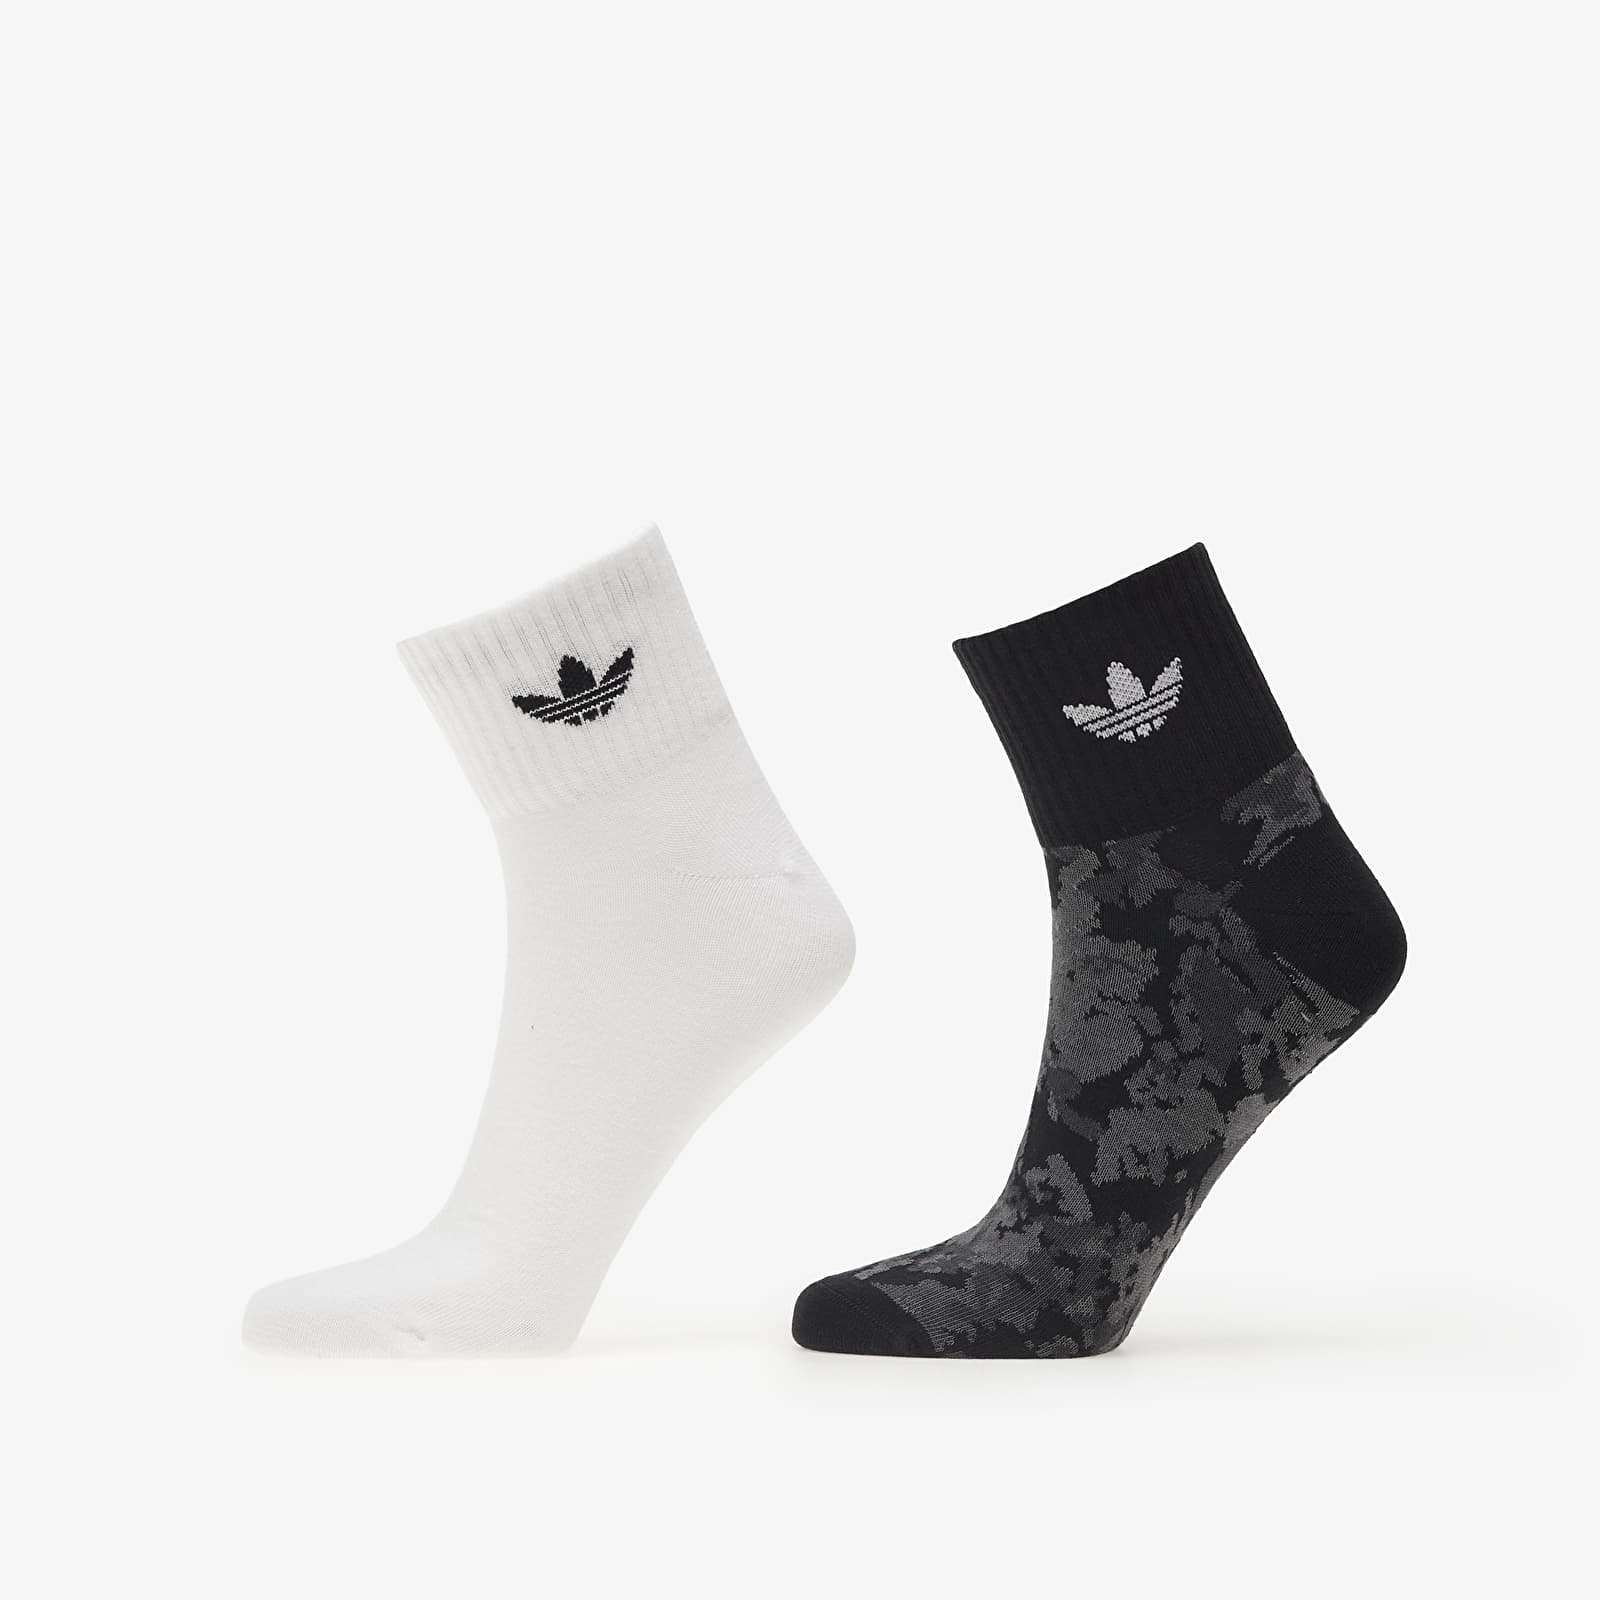 Socks adidas Camo Ankle Socks 2-Pack Multicolor/ Black/ White